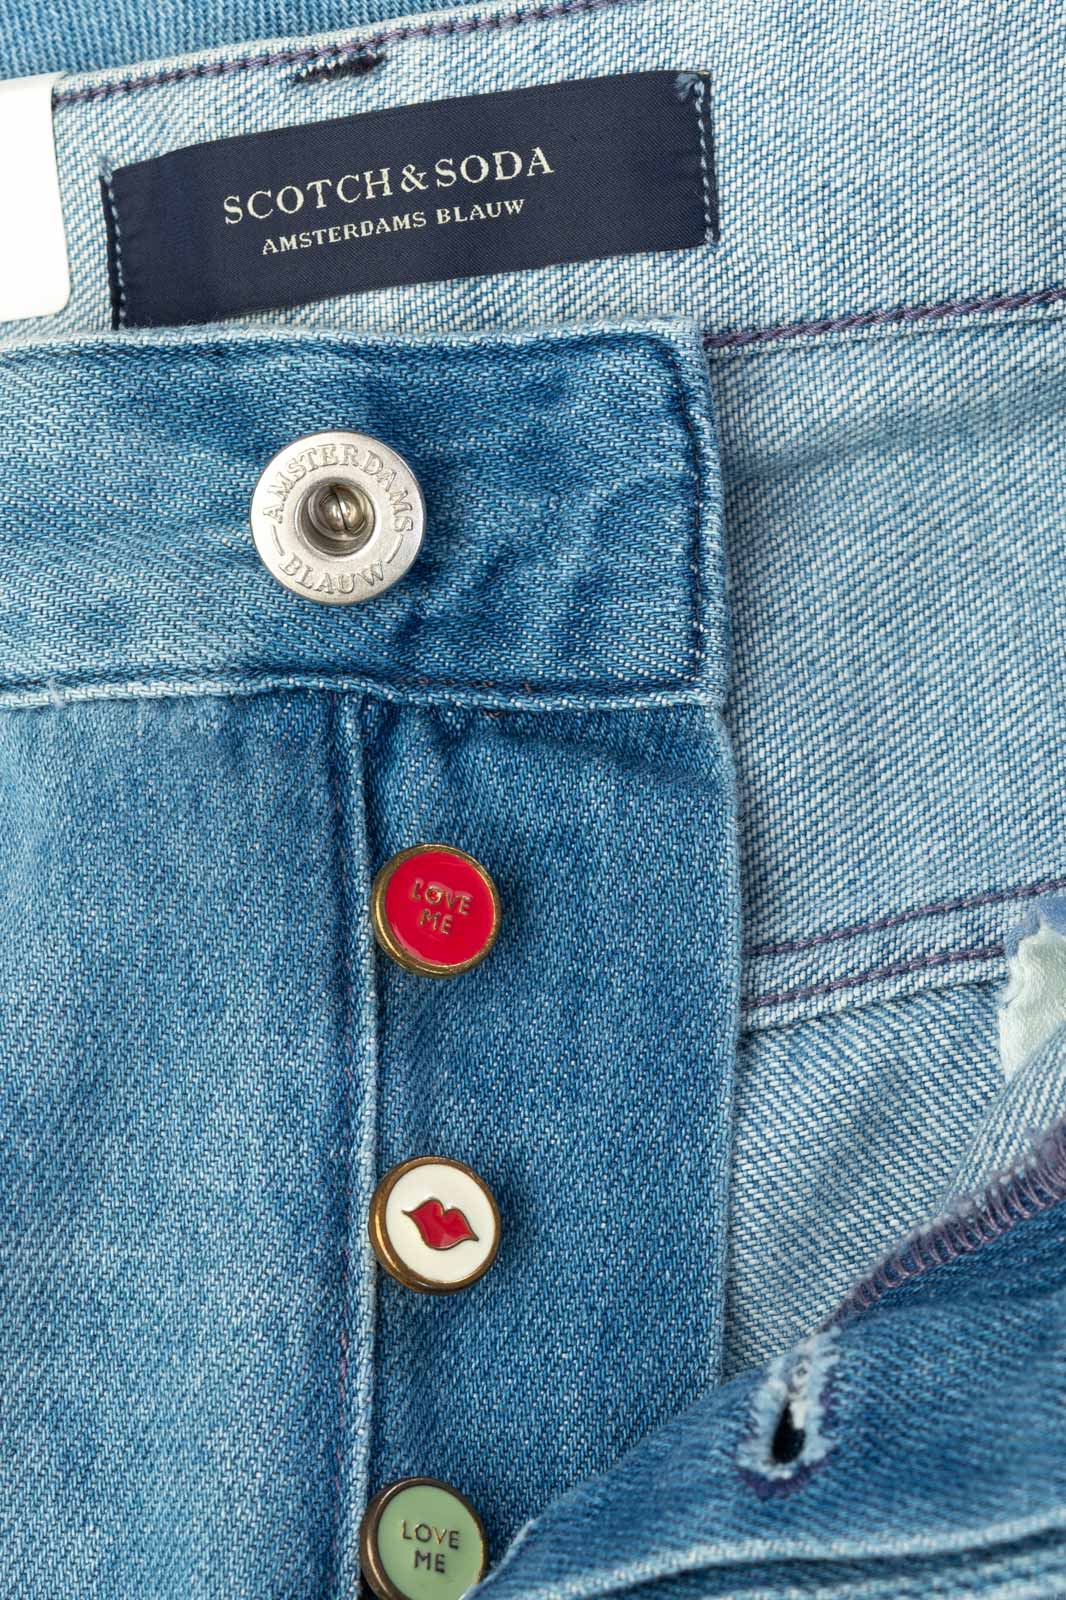 Imperialisme emulsie Tegenstander SCOTCH & SODA AMSTERDAM BLAUW Jeans W27 L32 Distressed Faded Button Fl  –POPPRI Online Fashion Auctions